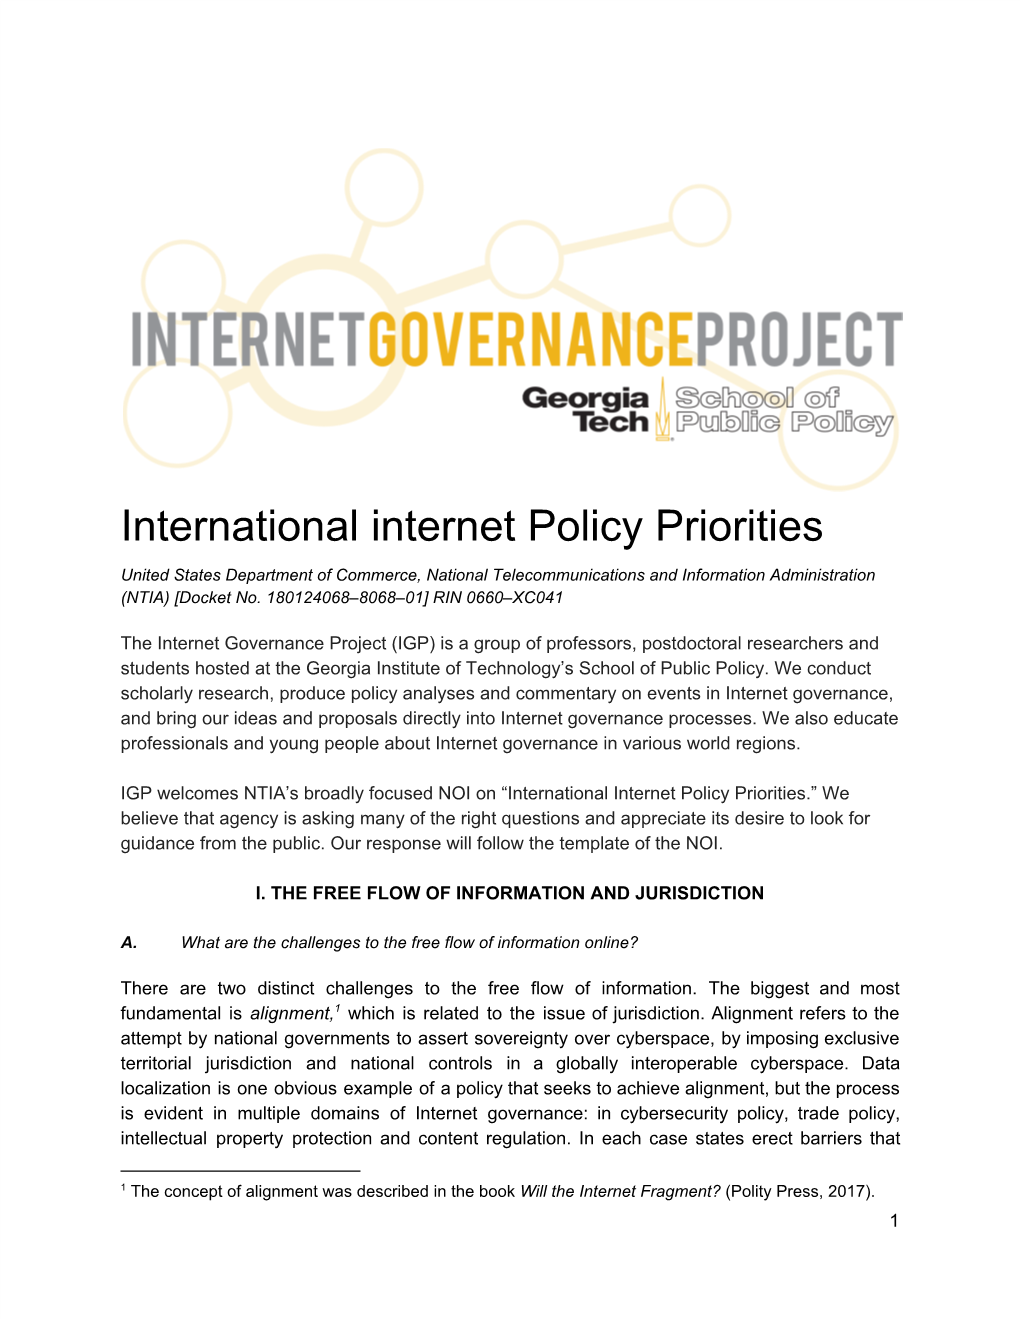 Internet Governance Project